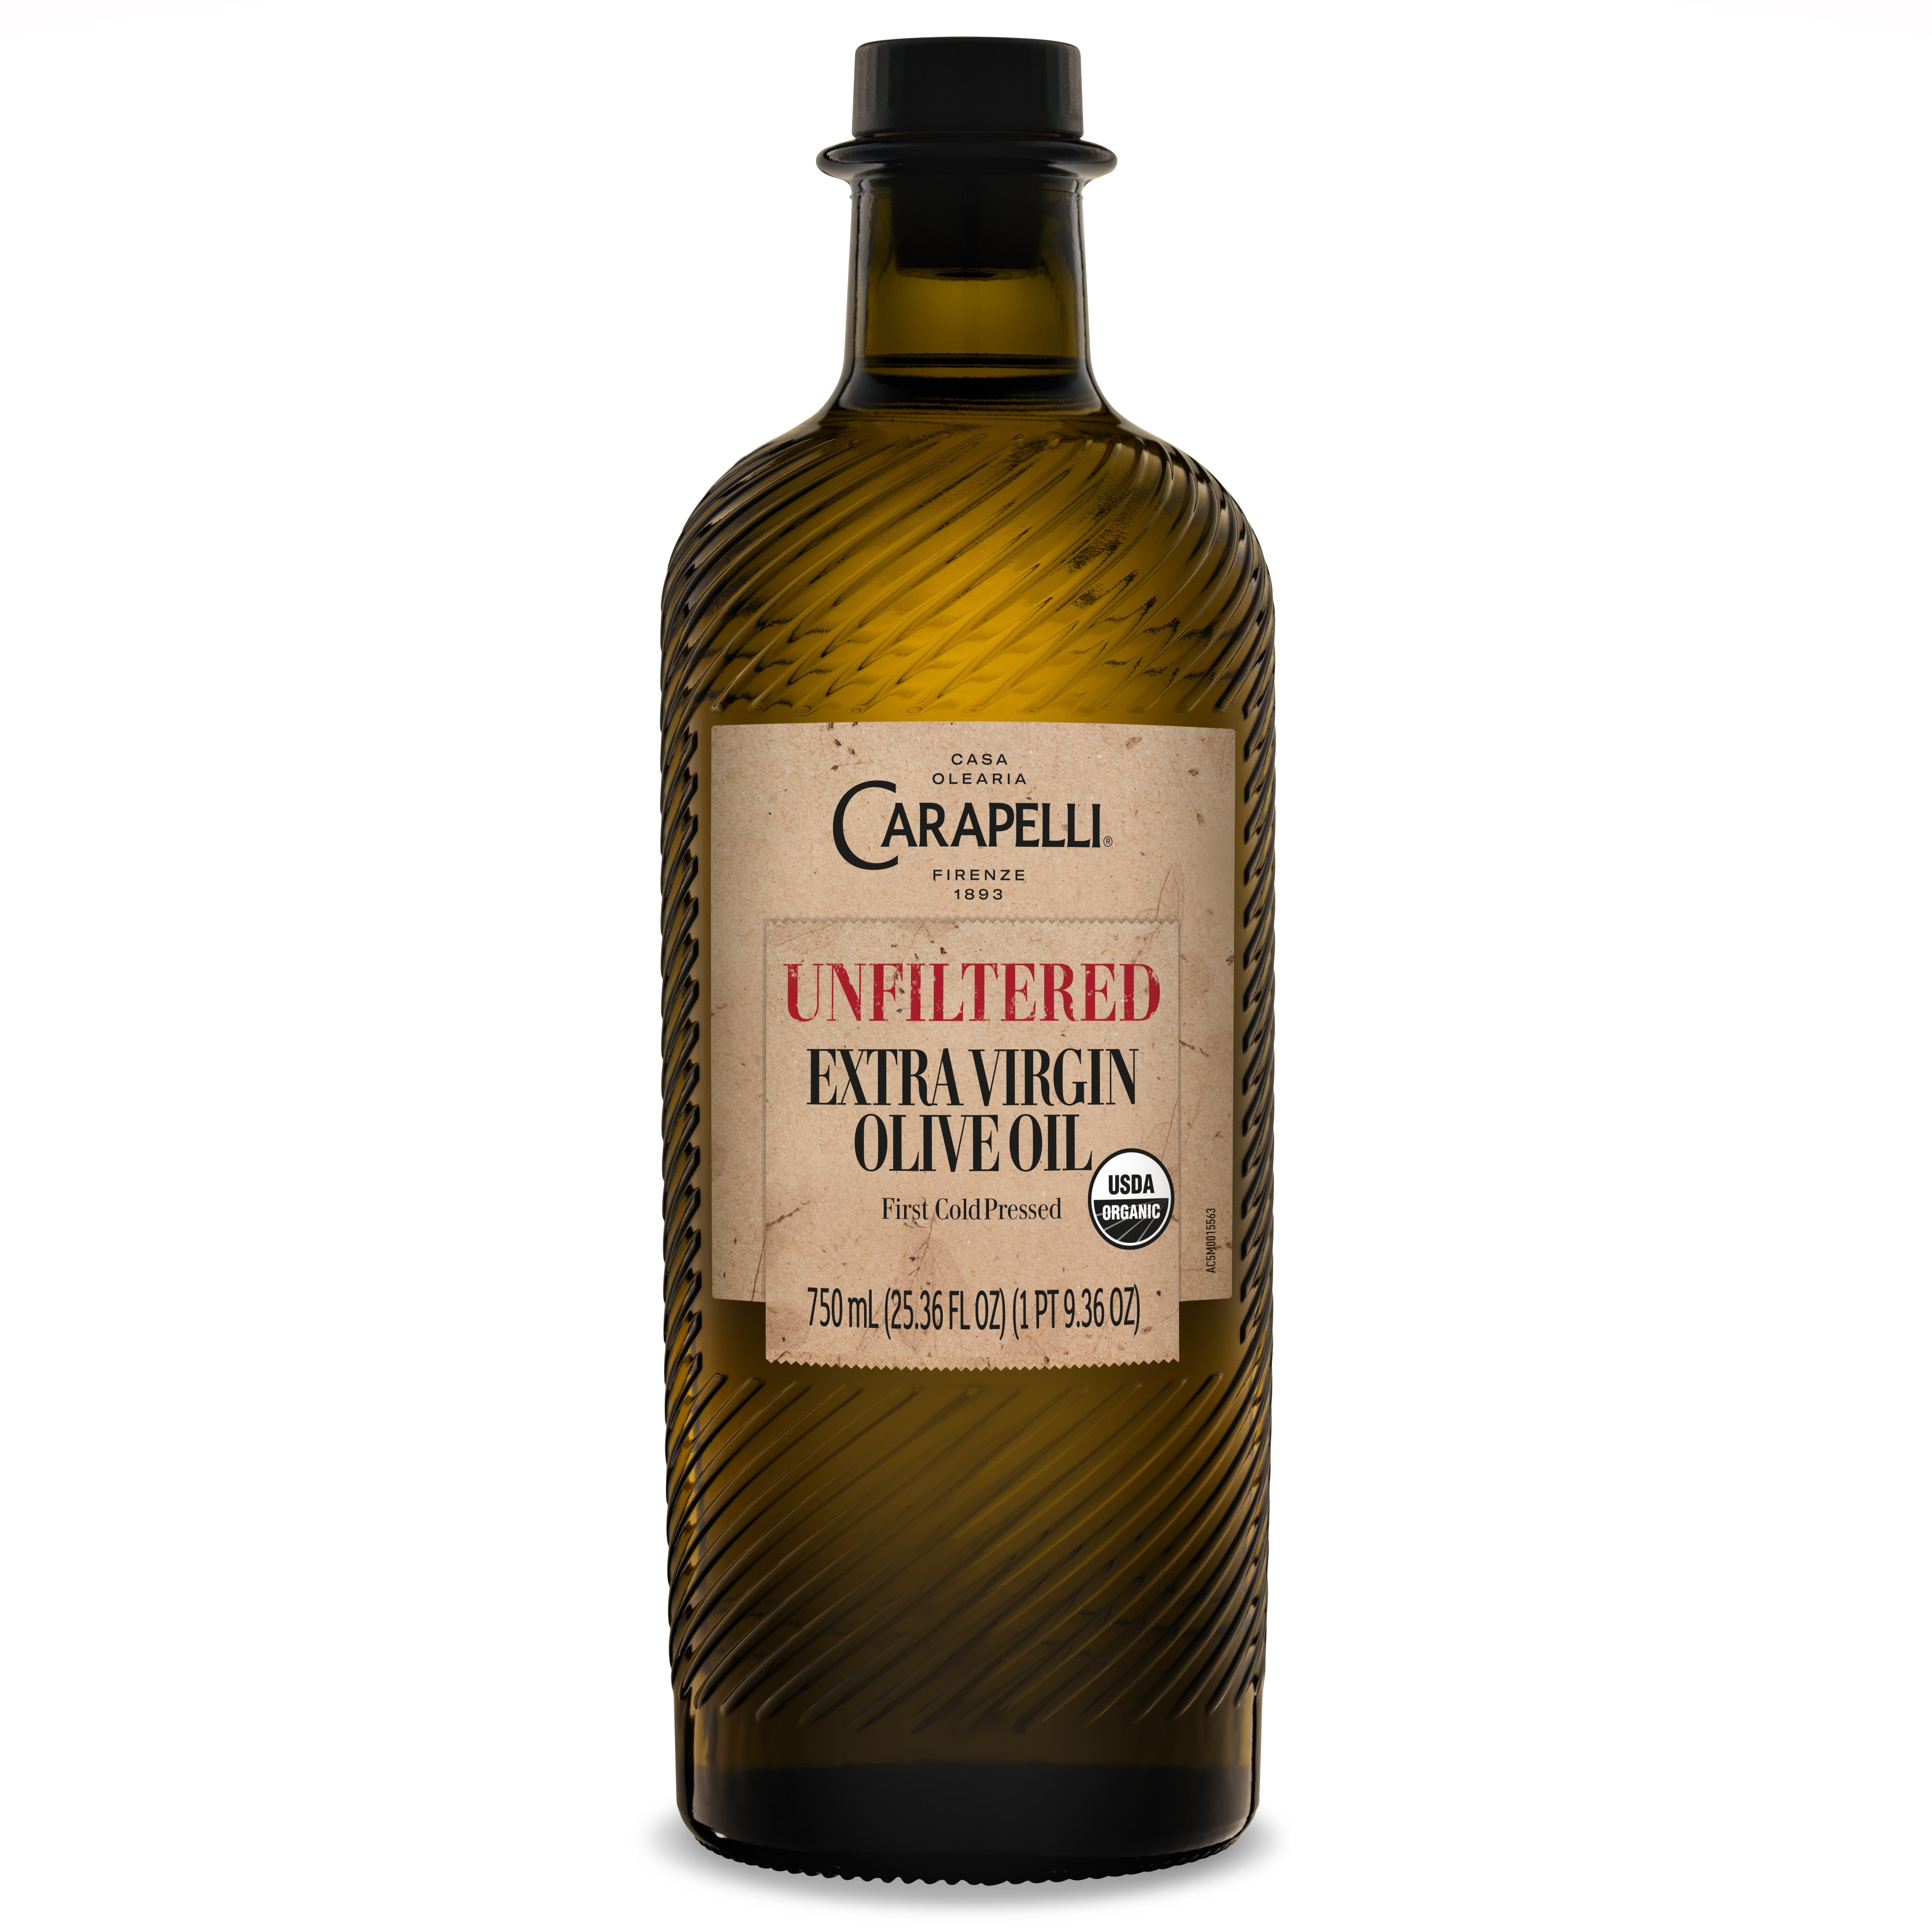 Carapelli Unfiltered Organic Extra Virgin Olive Oil 25.36 oz